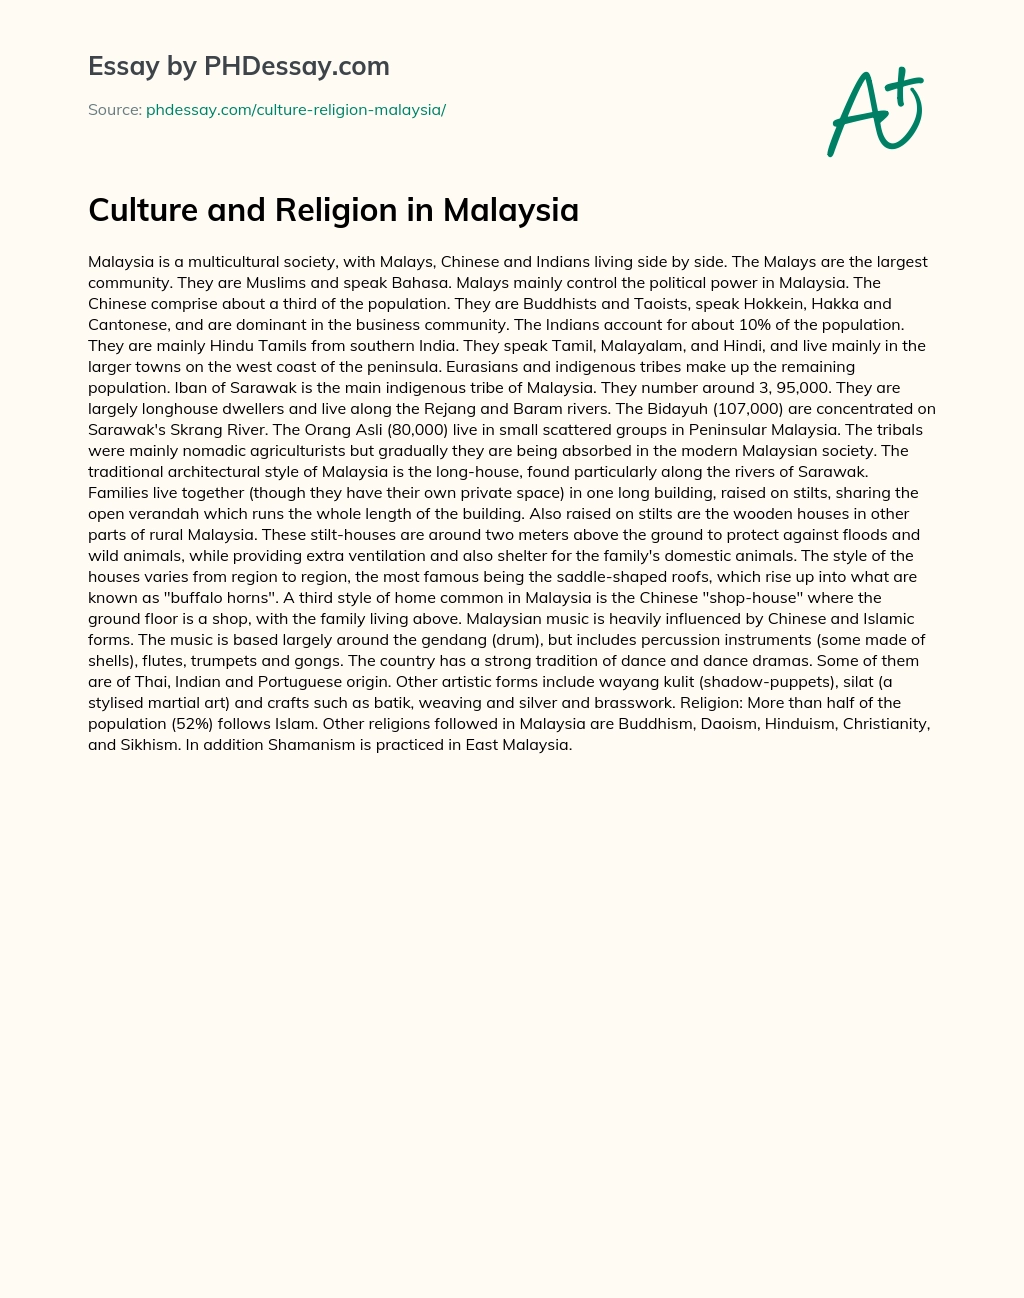 Culture and Religion in Malaysia essay